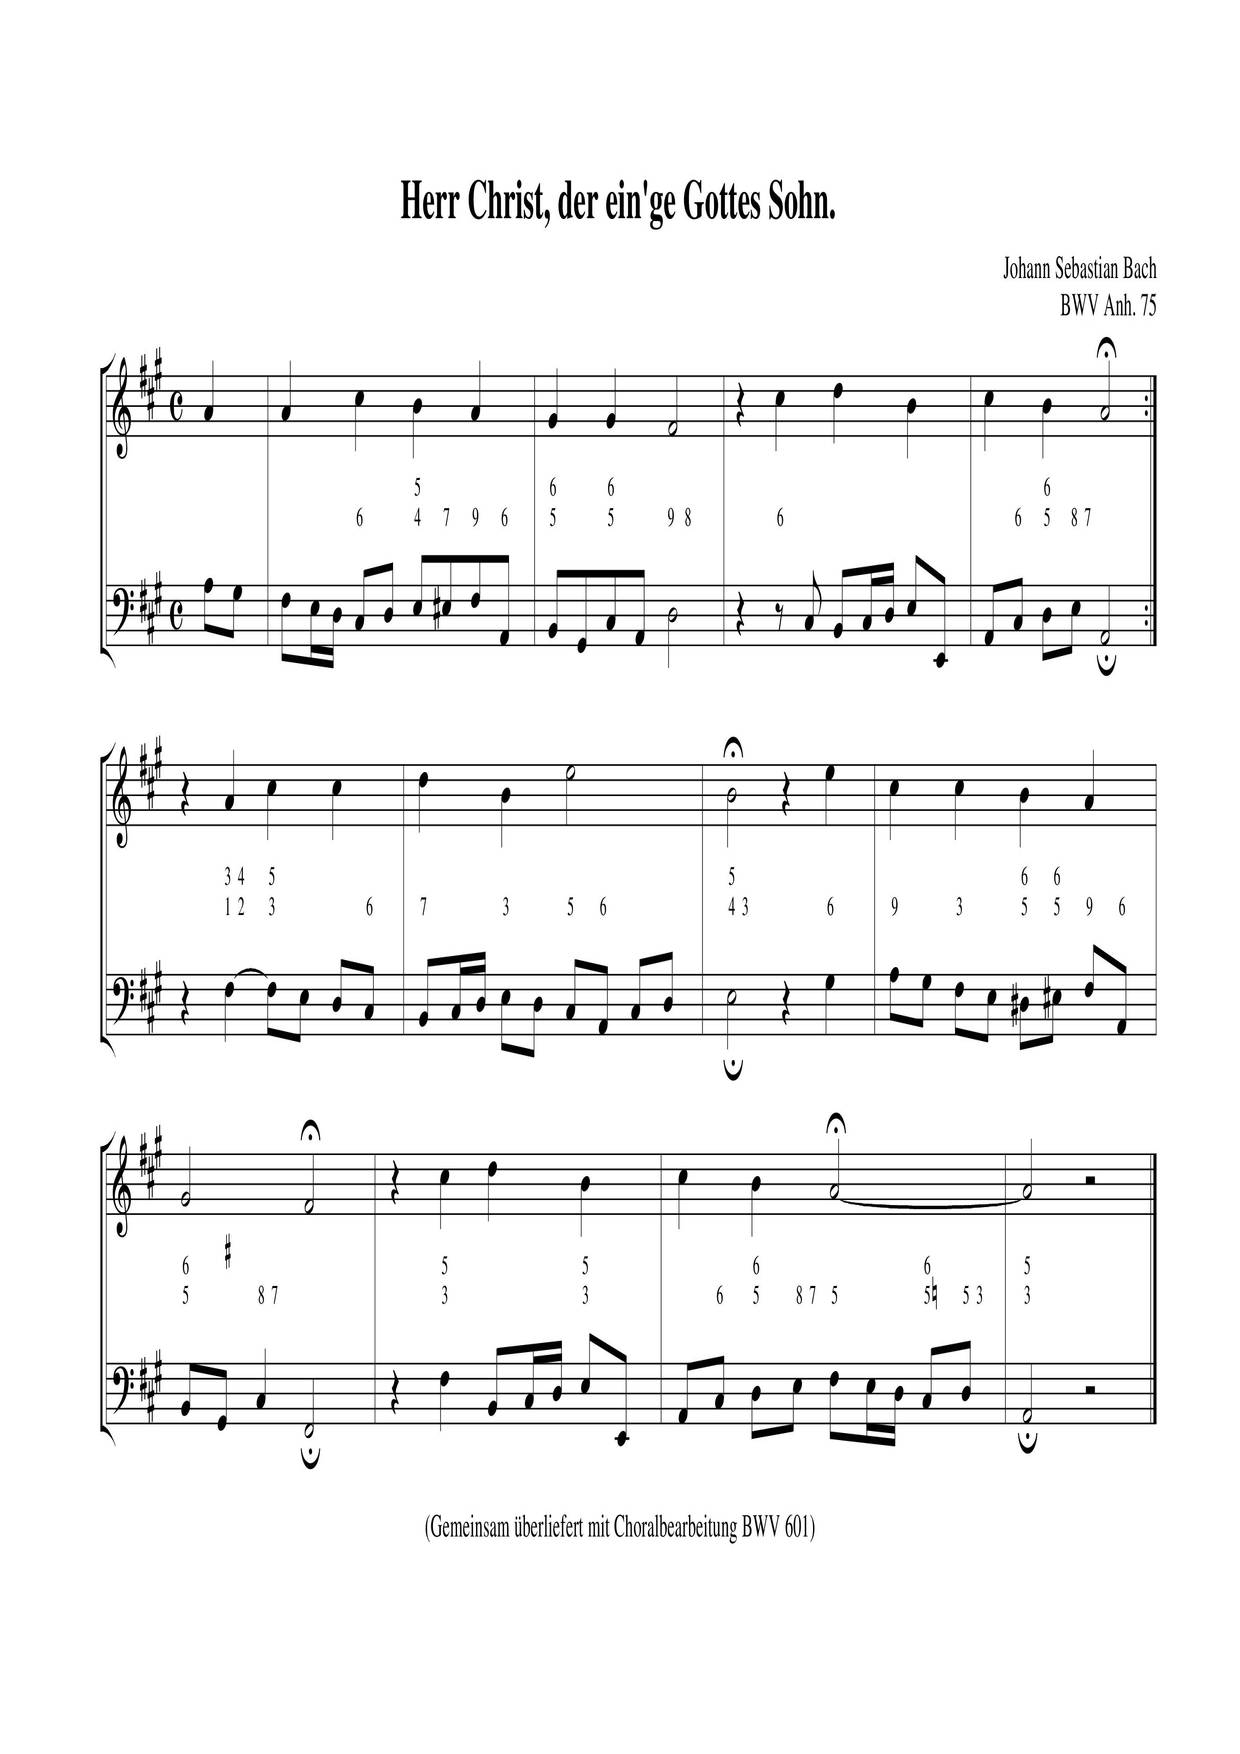 Herr Christ, Der Einge Gottessohn, BWV Anh. 75琴谱